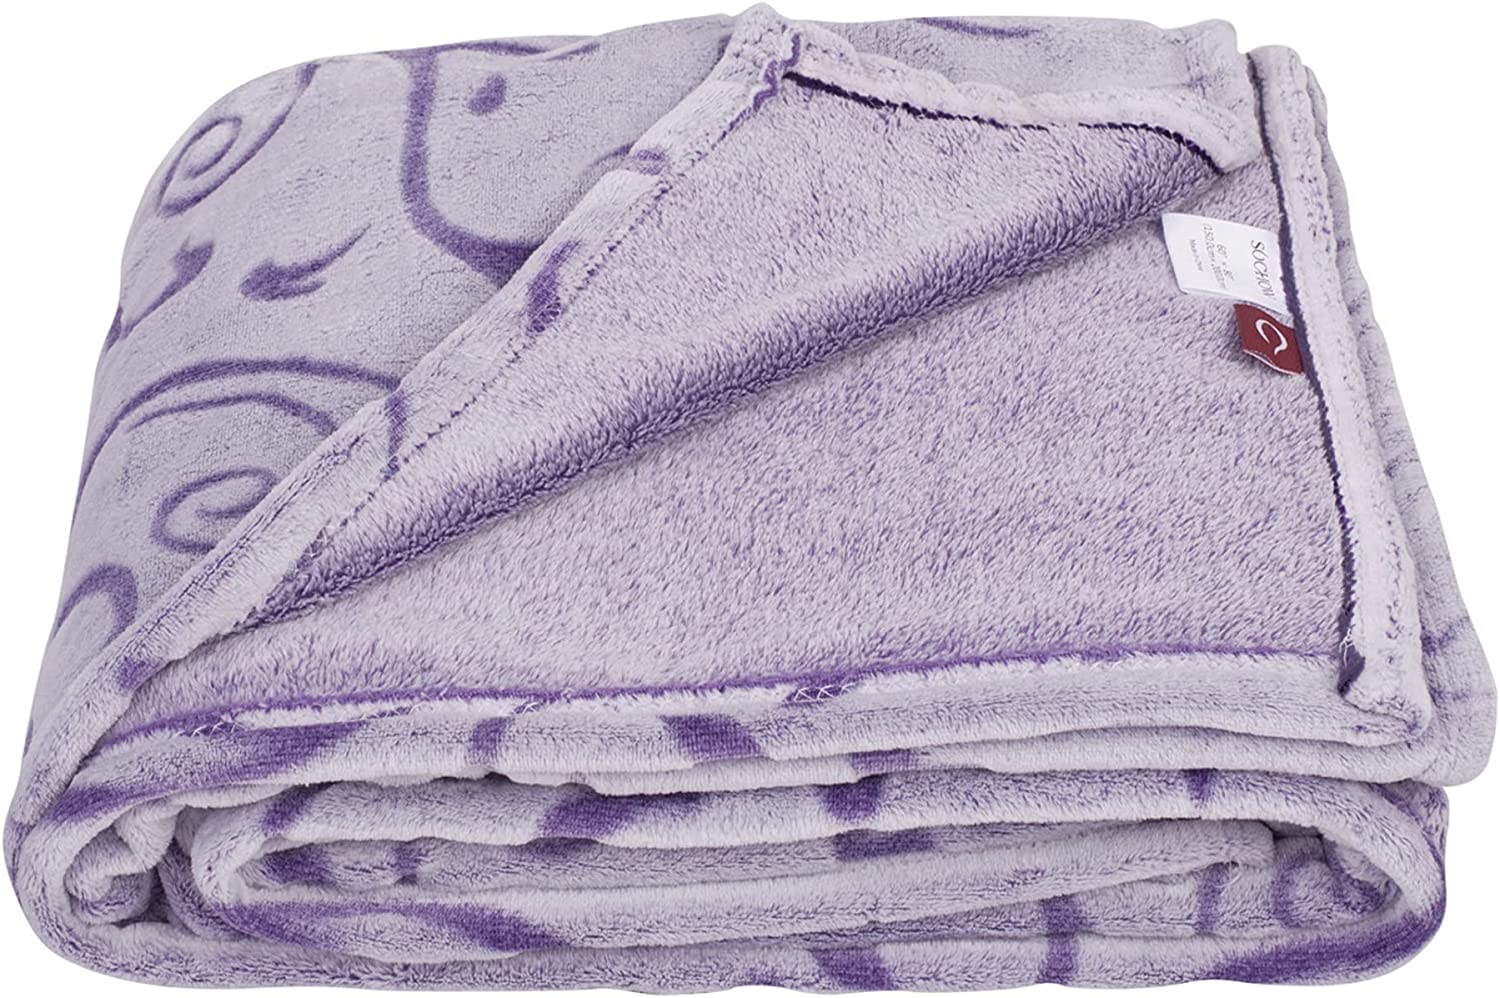 Flannel Fleece Throw Blanket, Lightweight Super Soft Cozy Plush Bed Blanket Featured Image